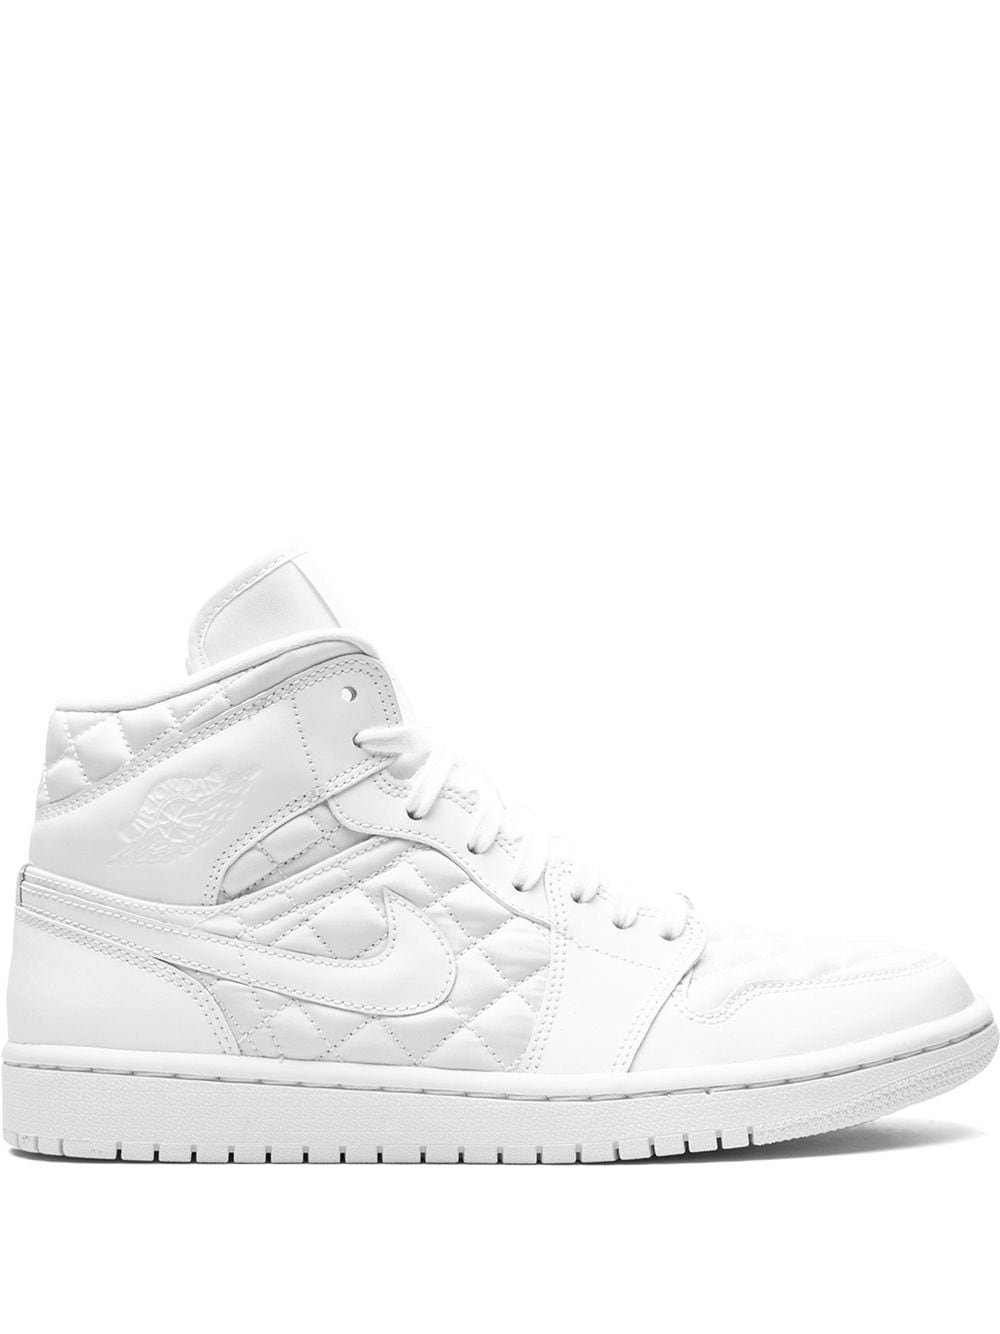 Jordan Air Jordan 1 Mid "Quilted White" sneakers